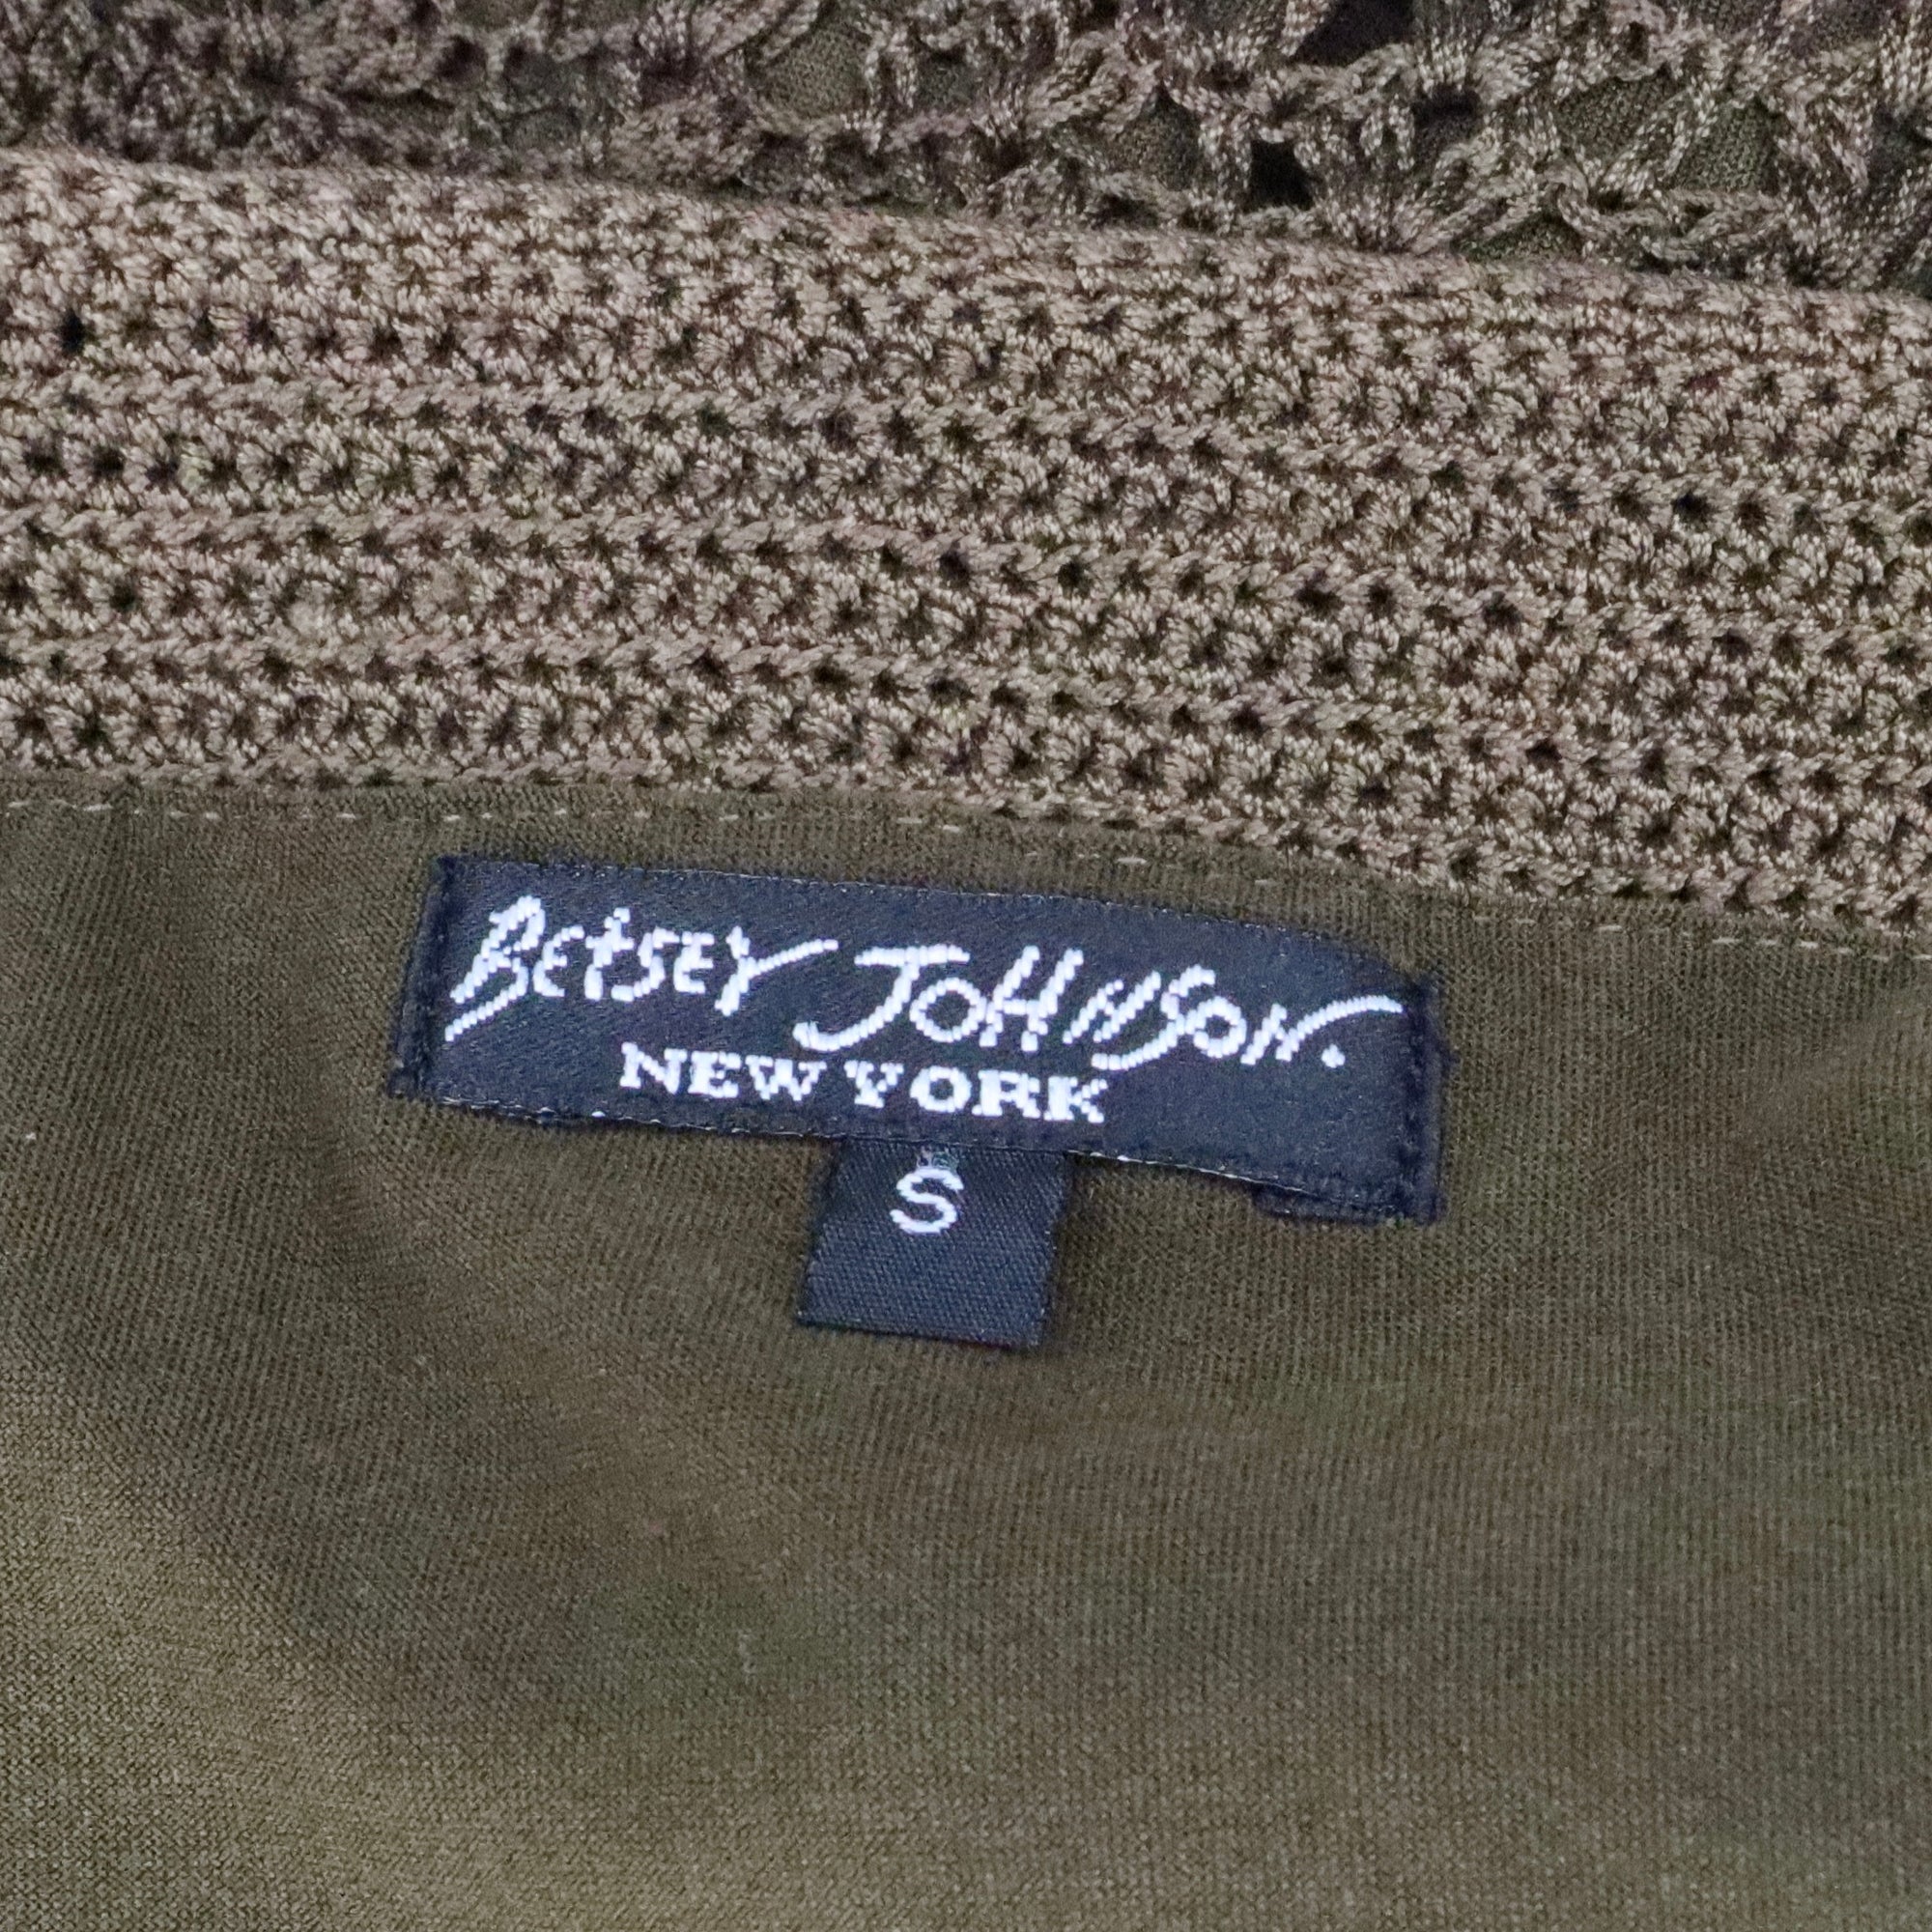 Betsey Johnson Olive Green Crochet Dress (XS-S)